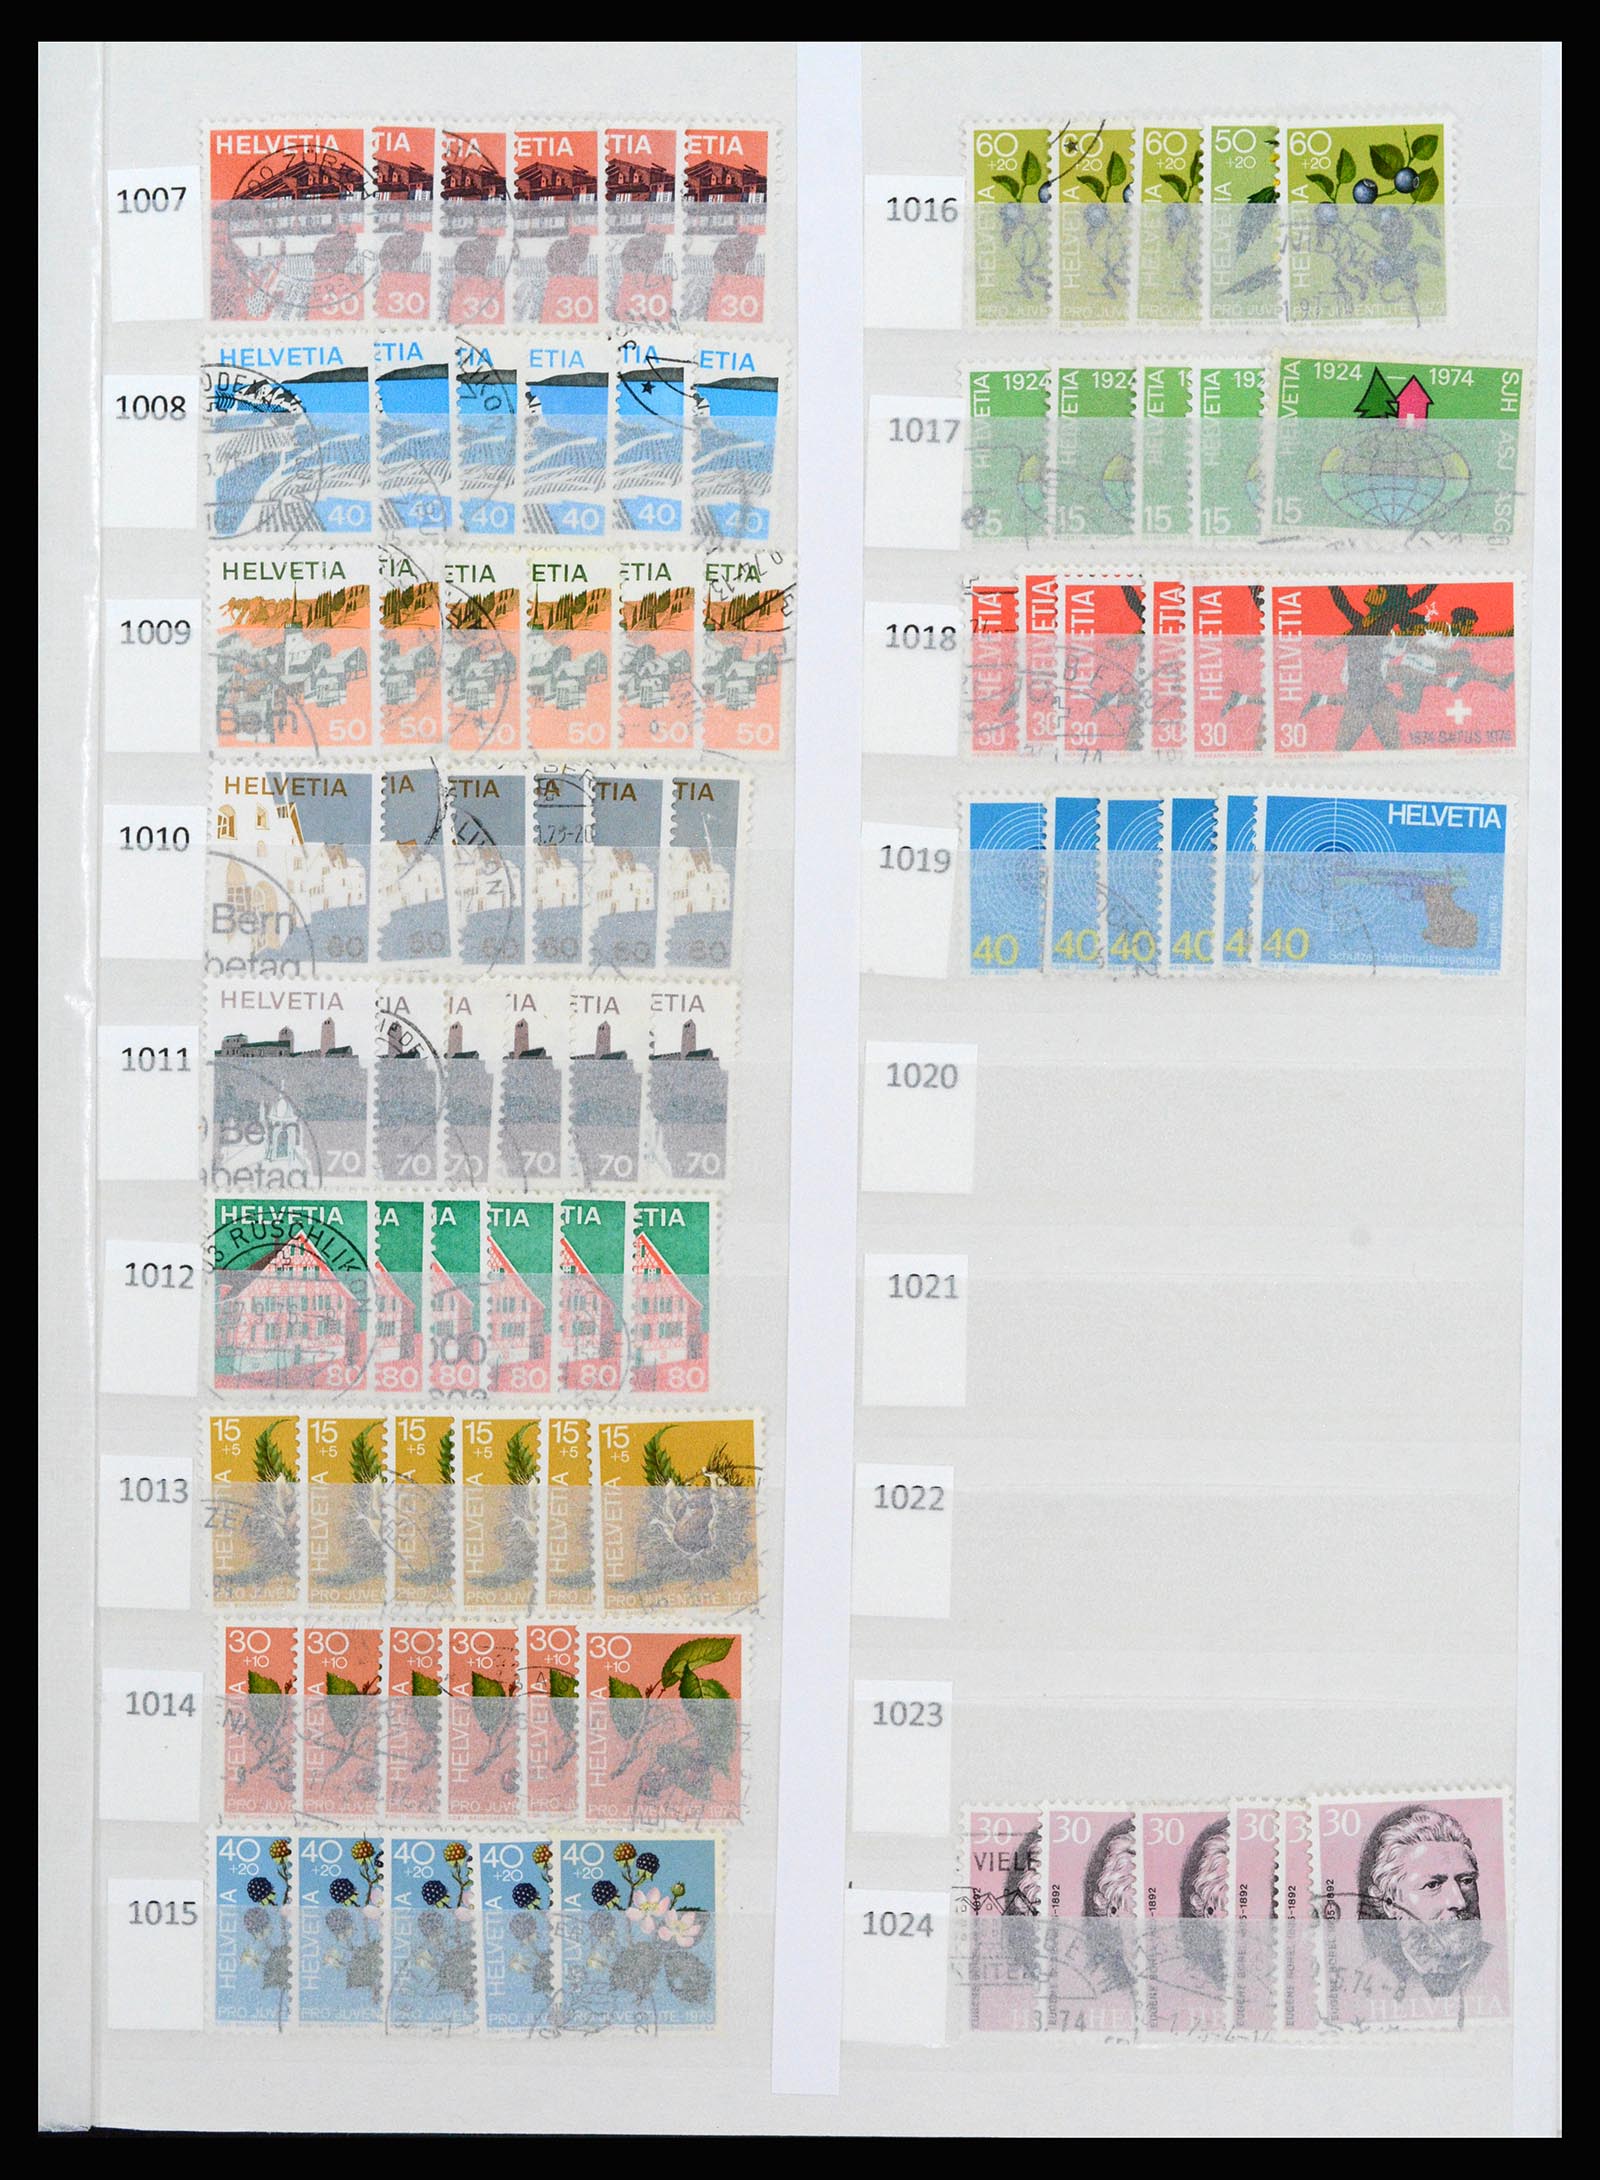 37252 054 - Stamp collection 37252 Switzerland 1900-2011.